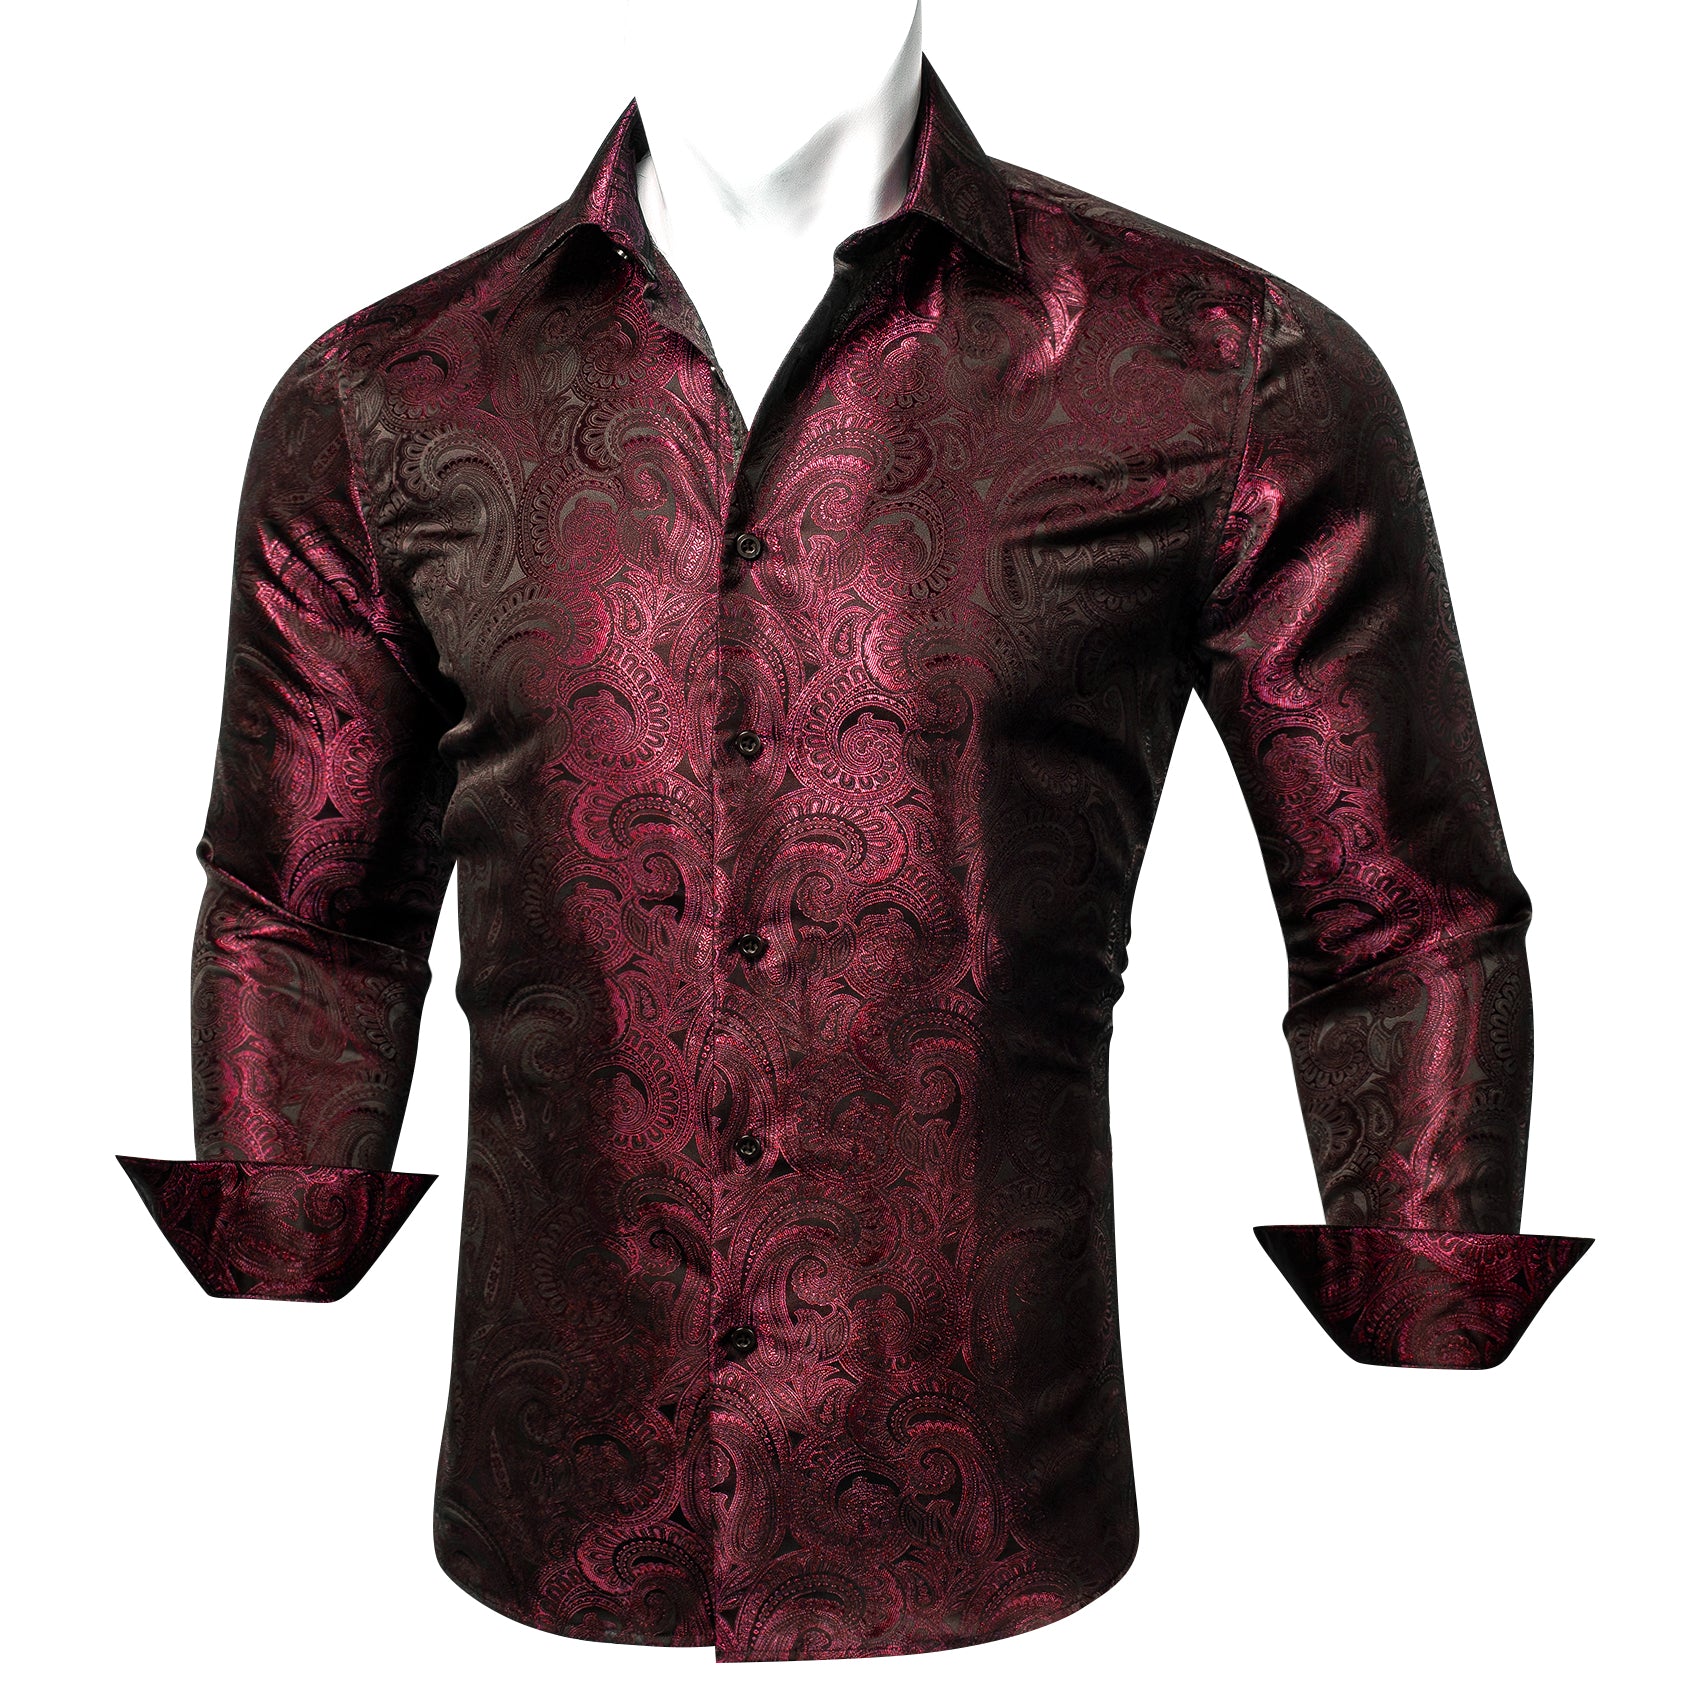 Barry.wang Long Sleeve Shirt Men's Burgundy Red Paisley Silk Shirt